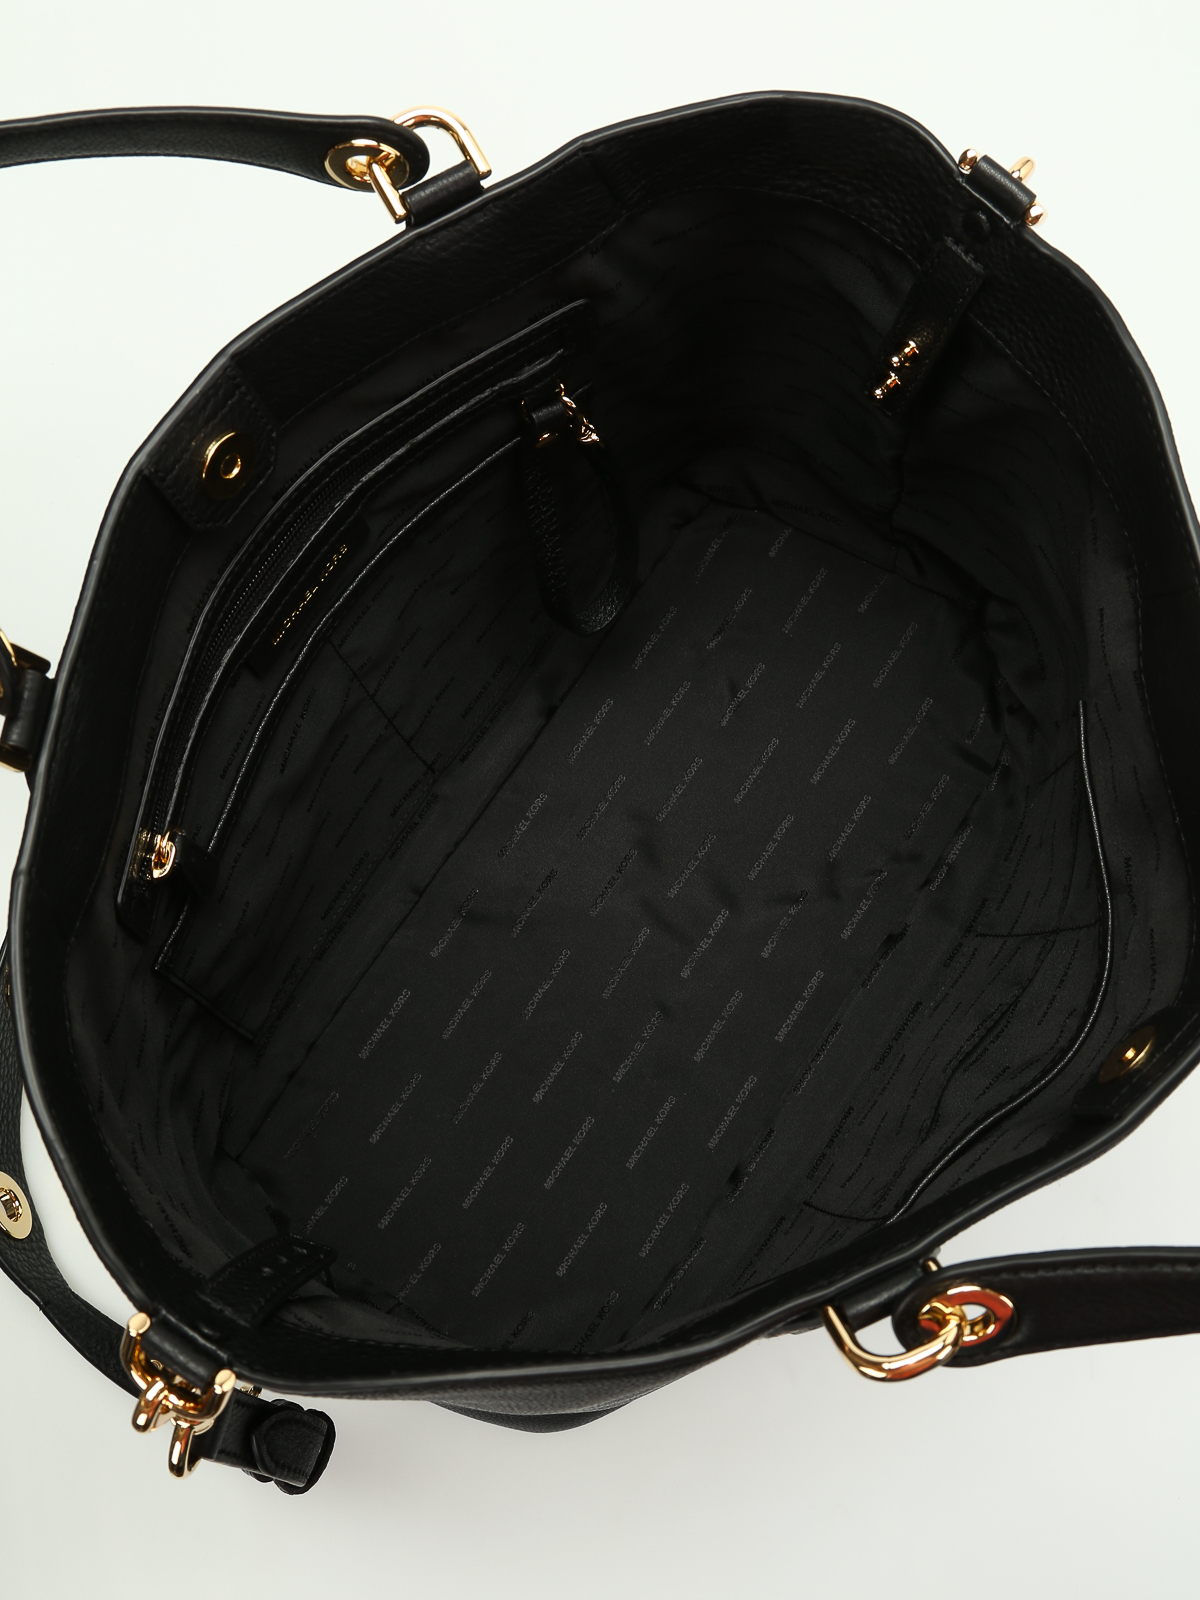 Michael Kors Brooklyn Large Two-Tone Pebbled Leather Shoulder Bag